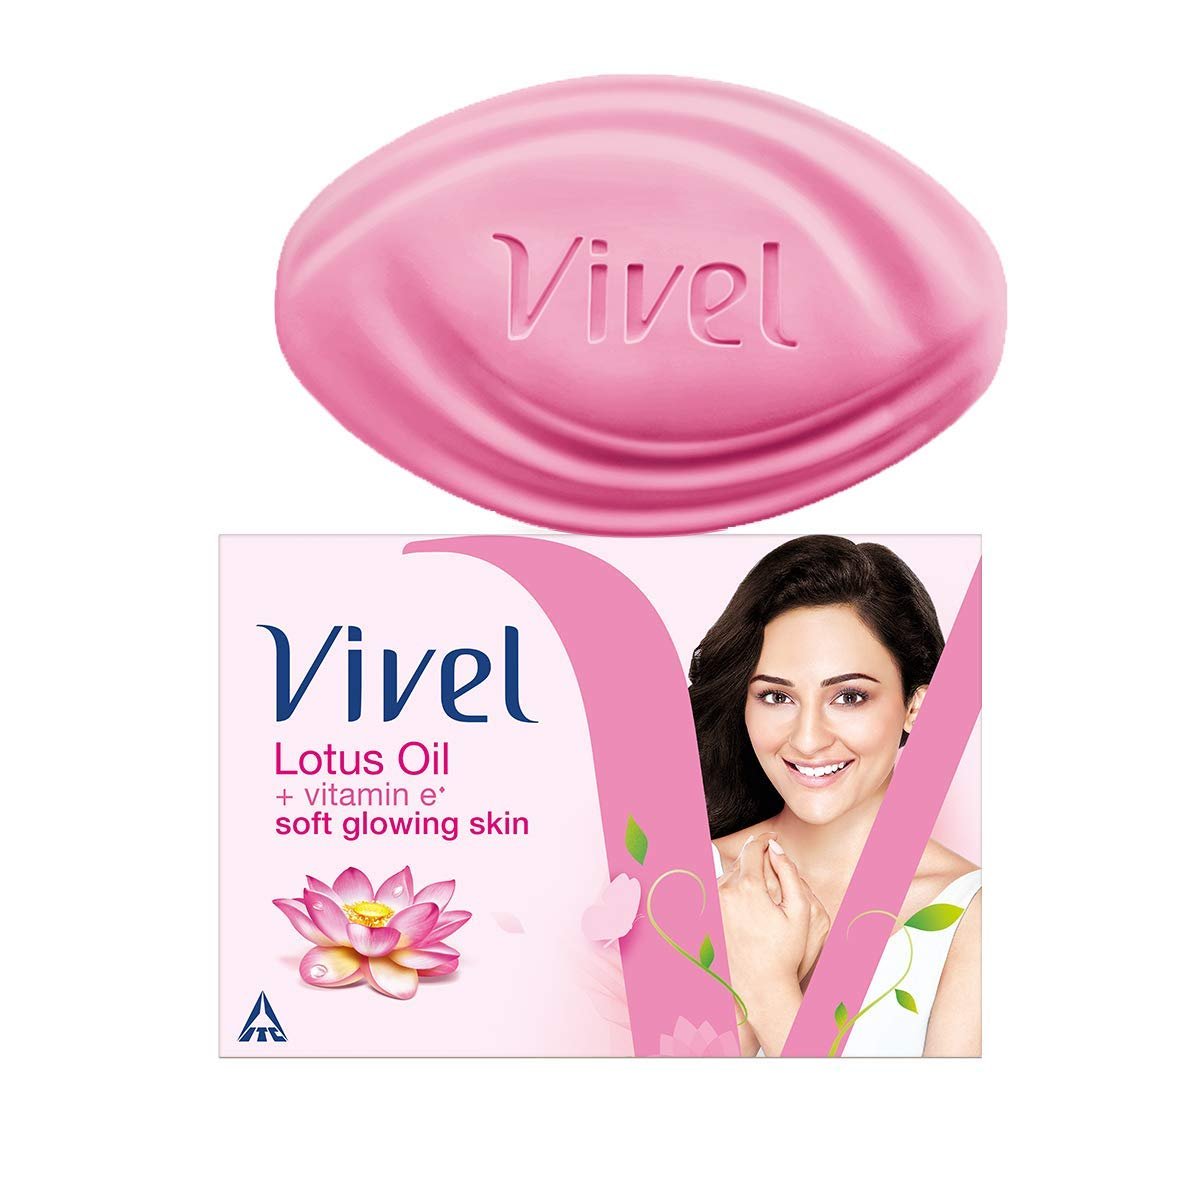 Vivel lotus oil(75g)